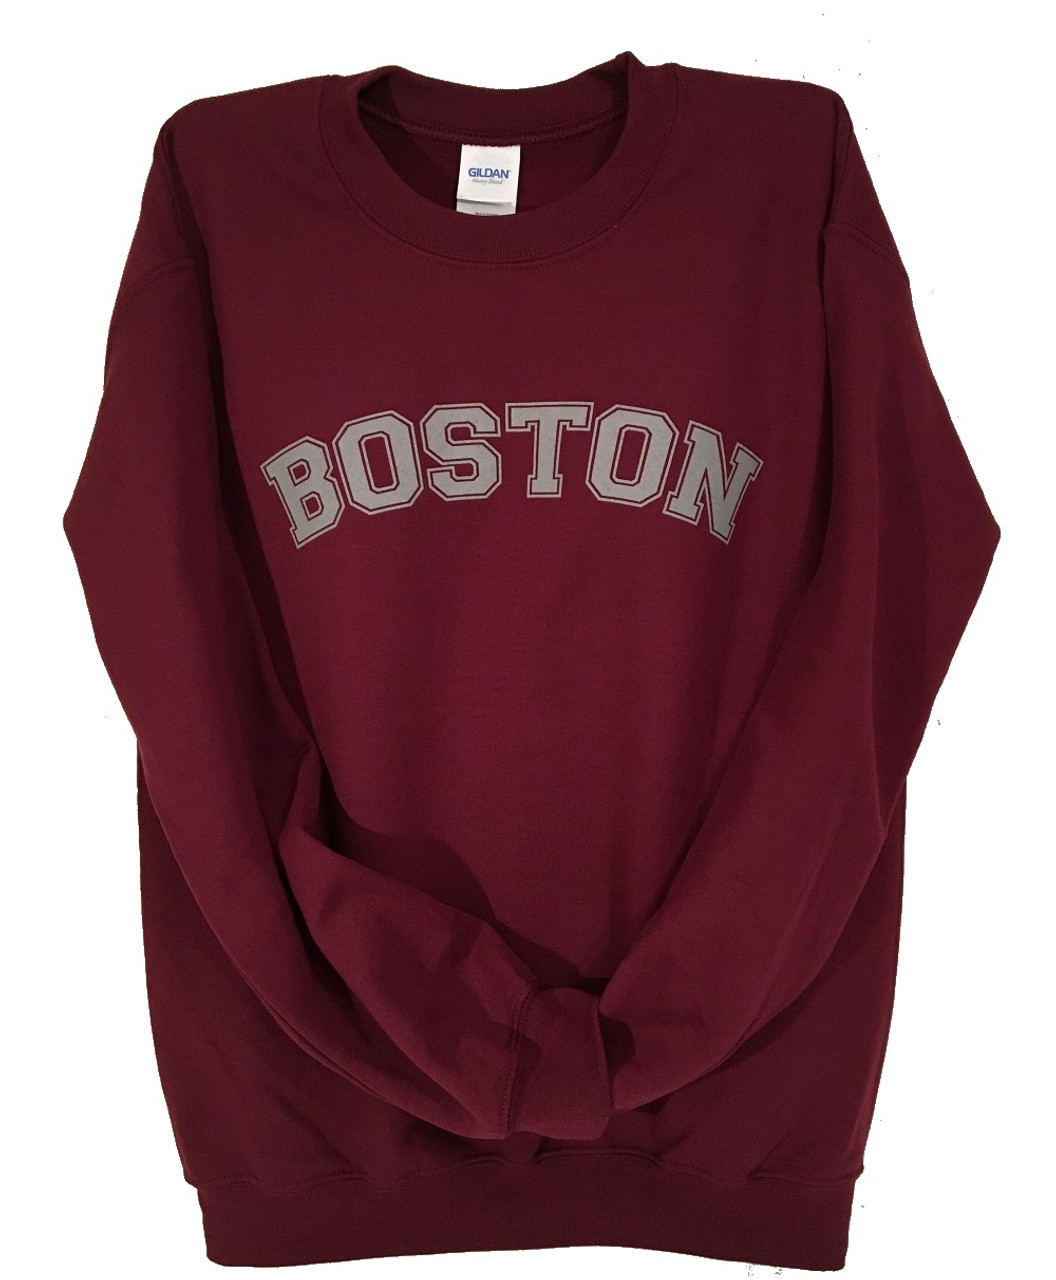 Boston sweatshirt with crew neck in maroon with gray Boston